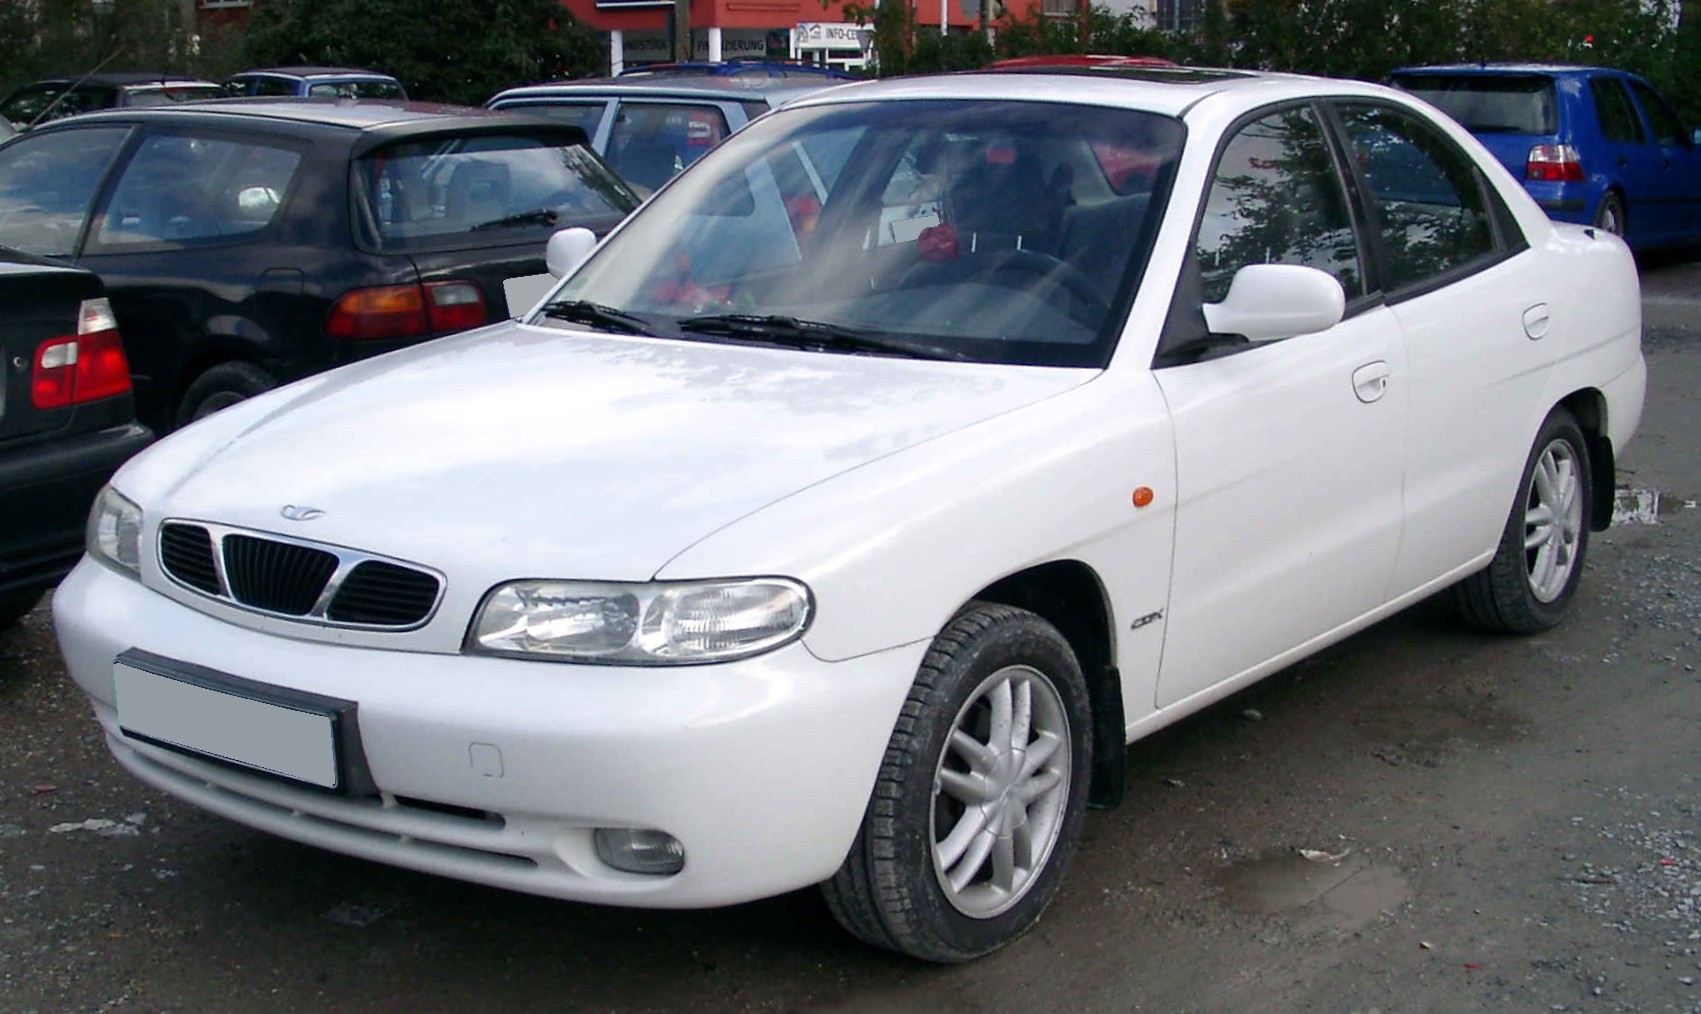 1999 Daewoo Nubira saloon - The official car of mediocrity :  r/regularcarreviews